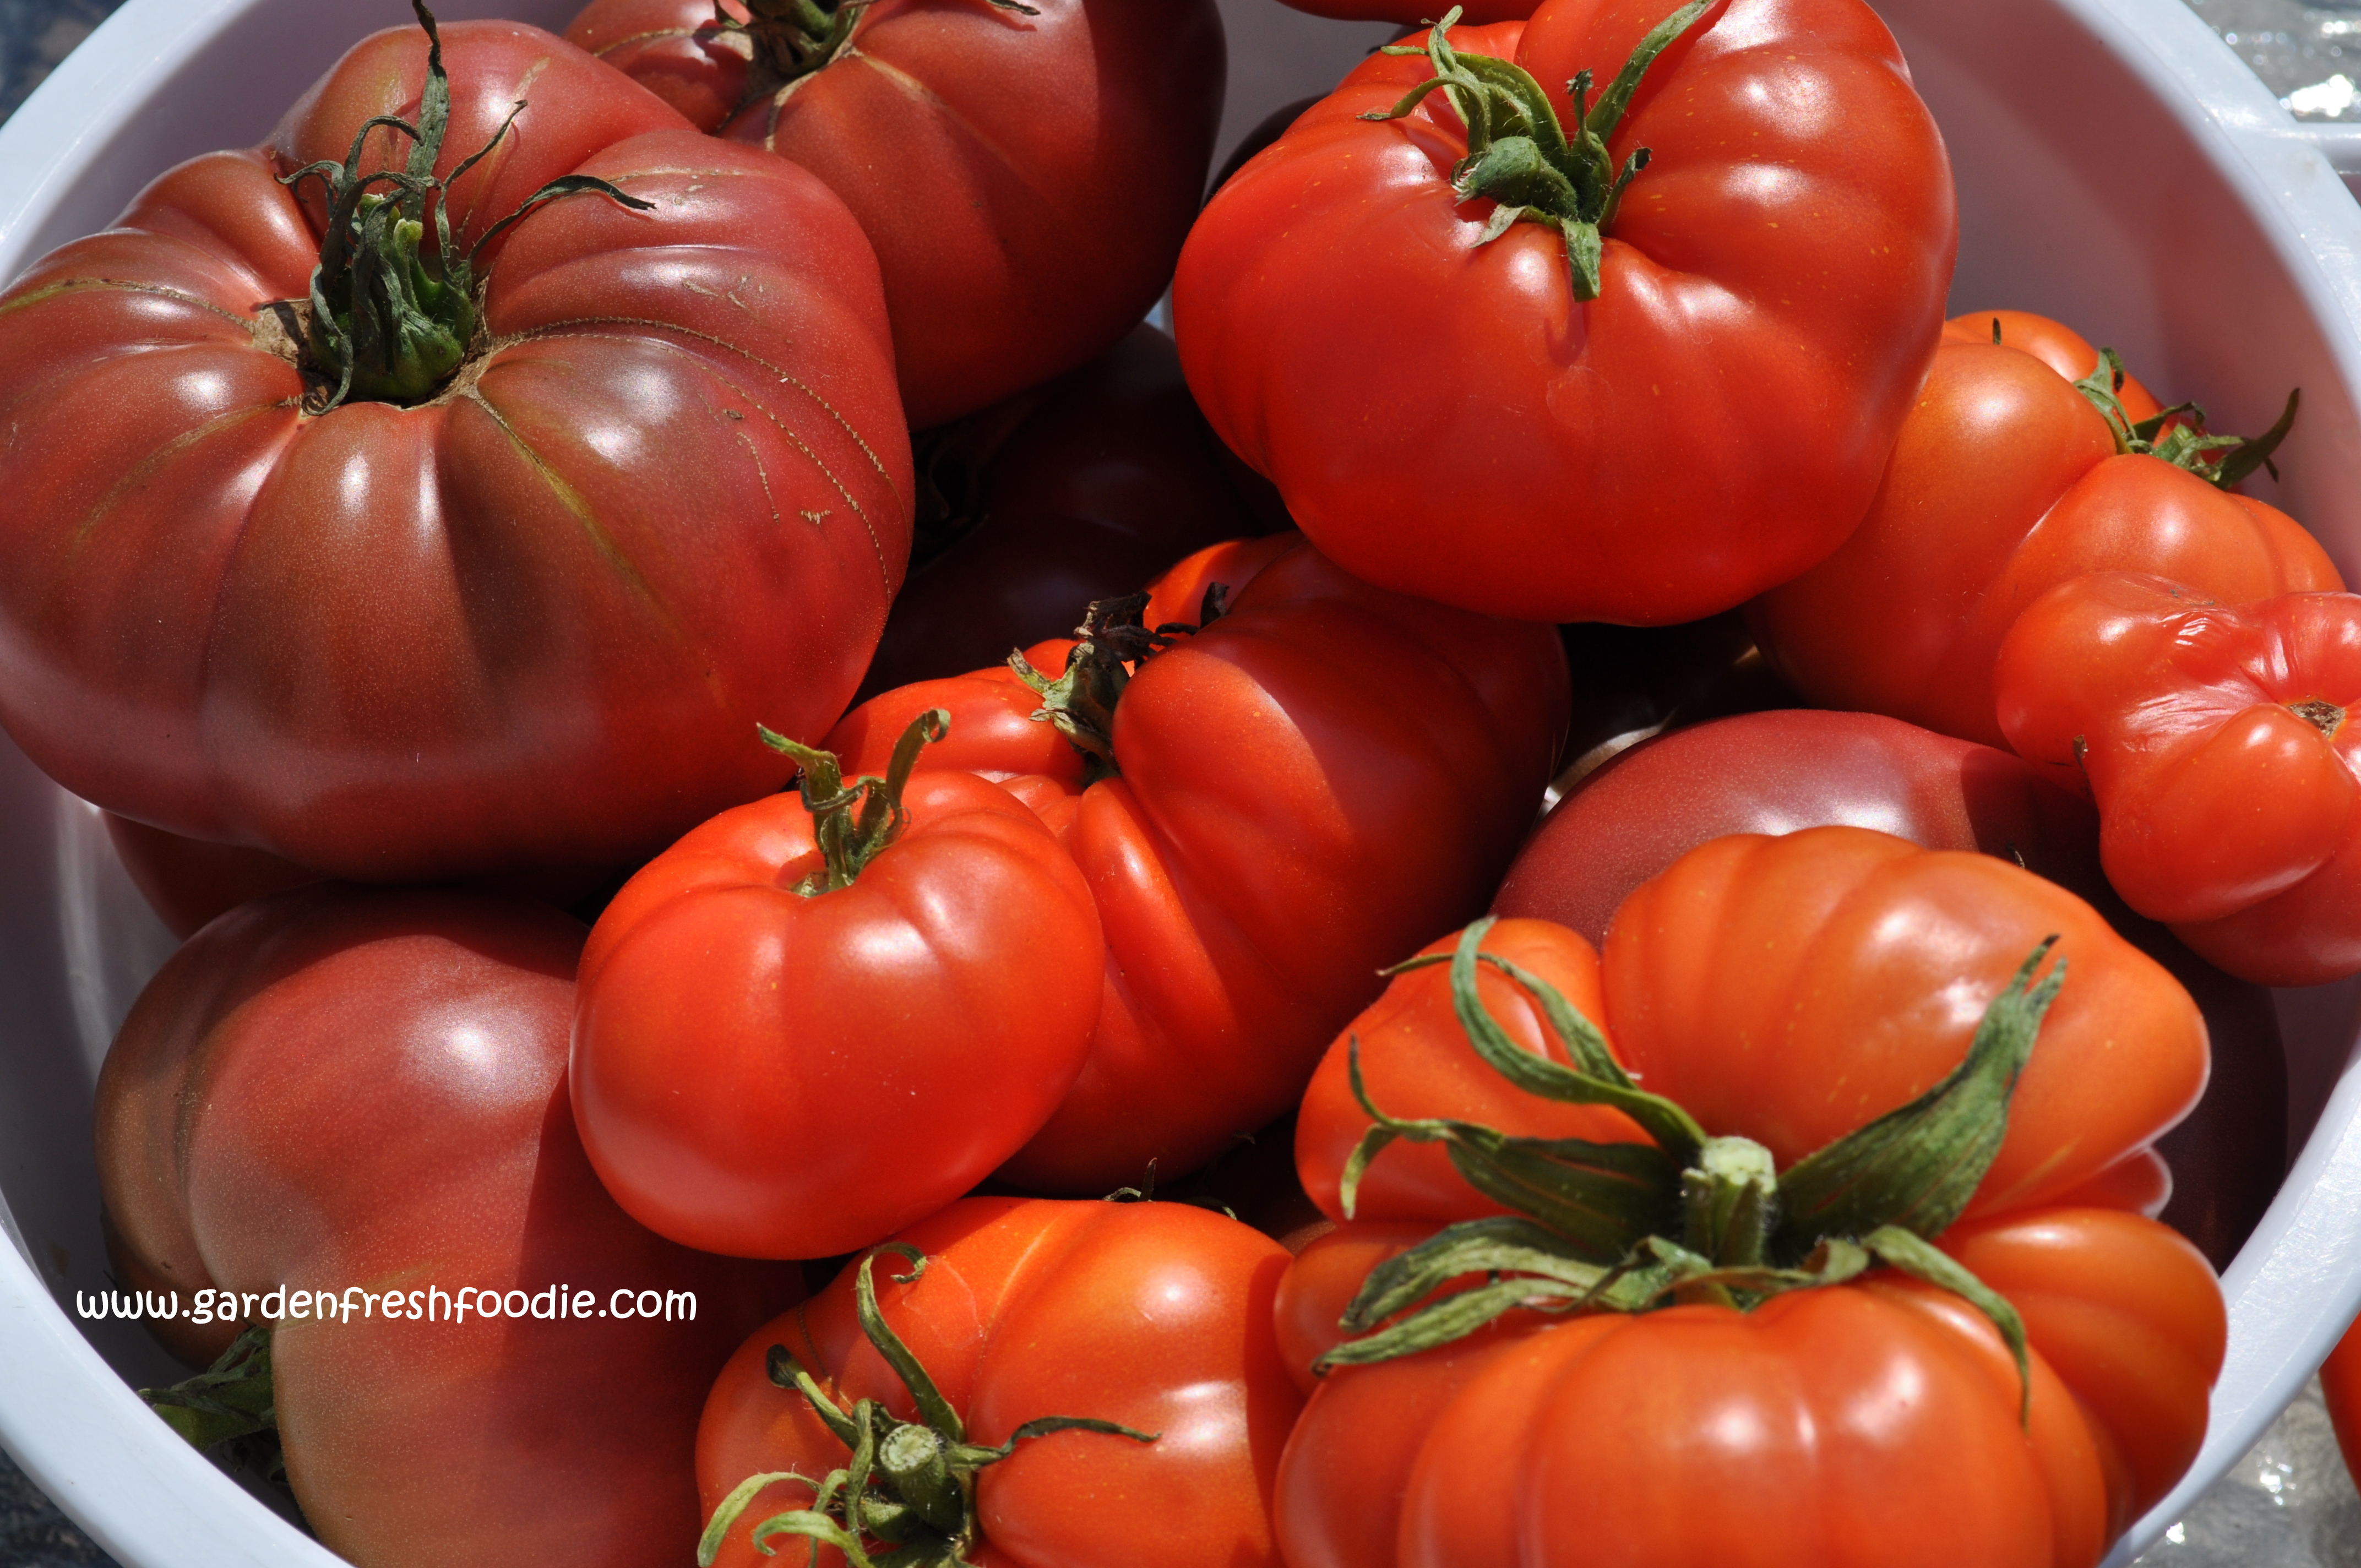 https://gardenfreshfoodie.com/wp-content/uploads/2014/09/Garden-Fresh-Tomatoes.jpg